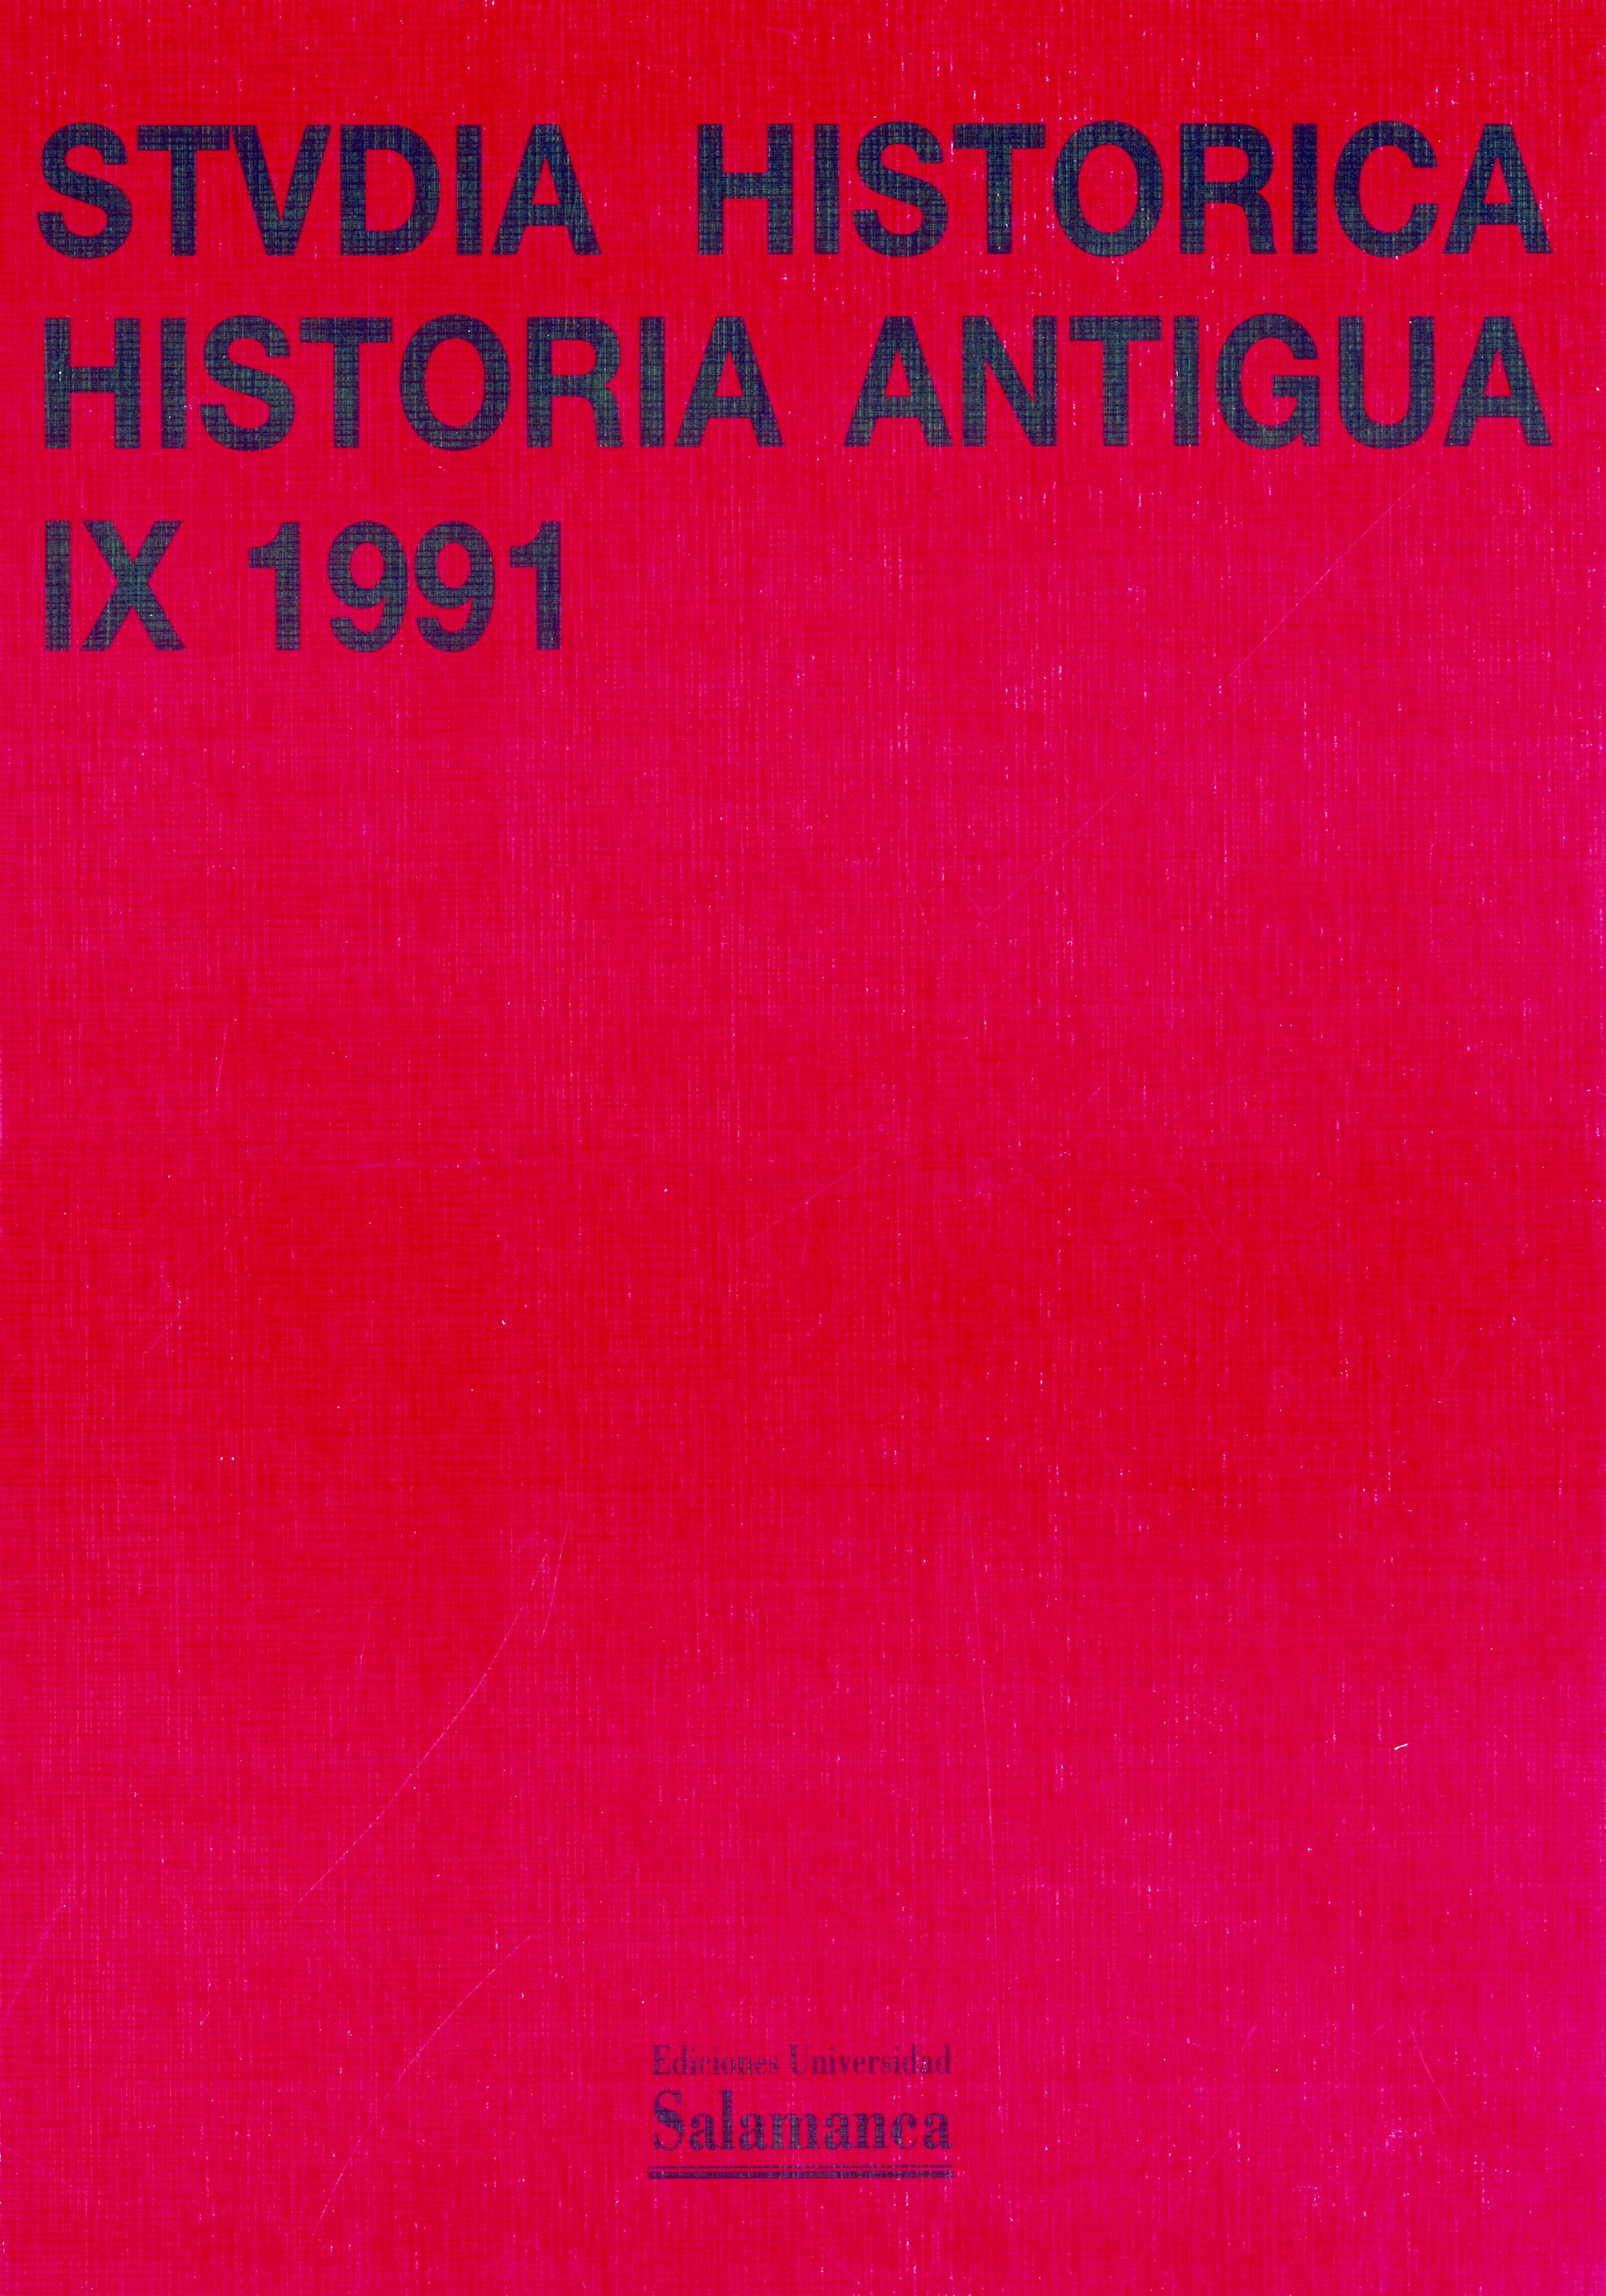                         Ver Vol. 9 (1991)
                    